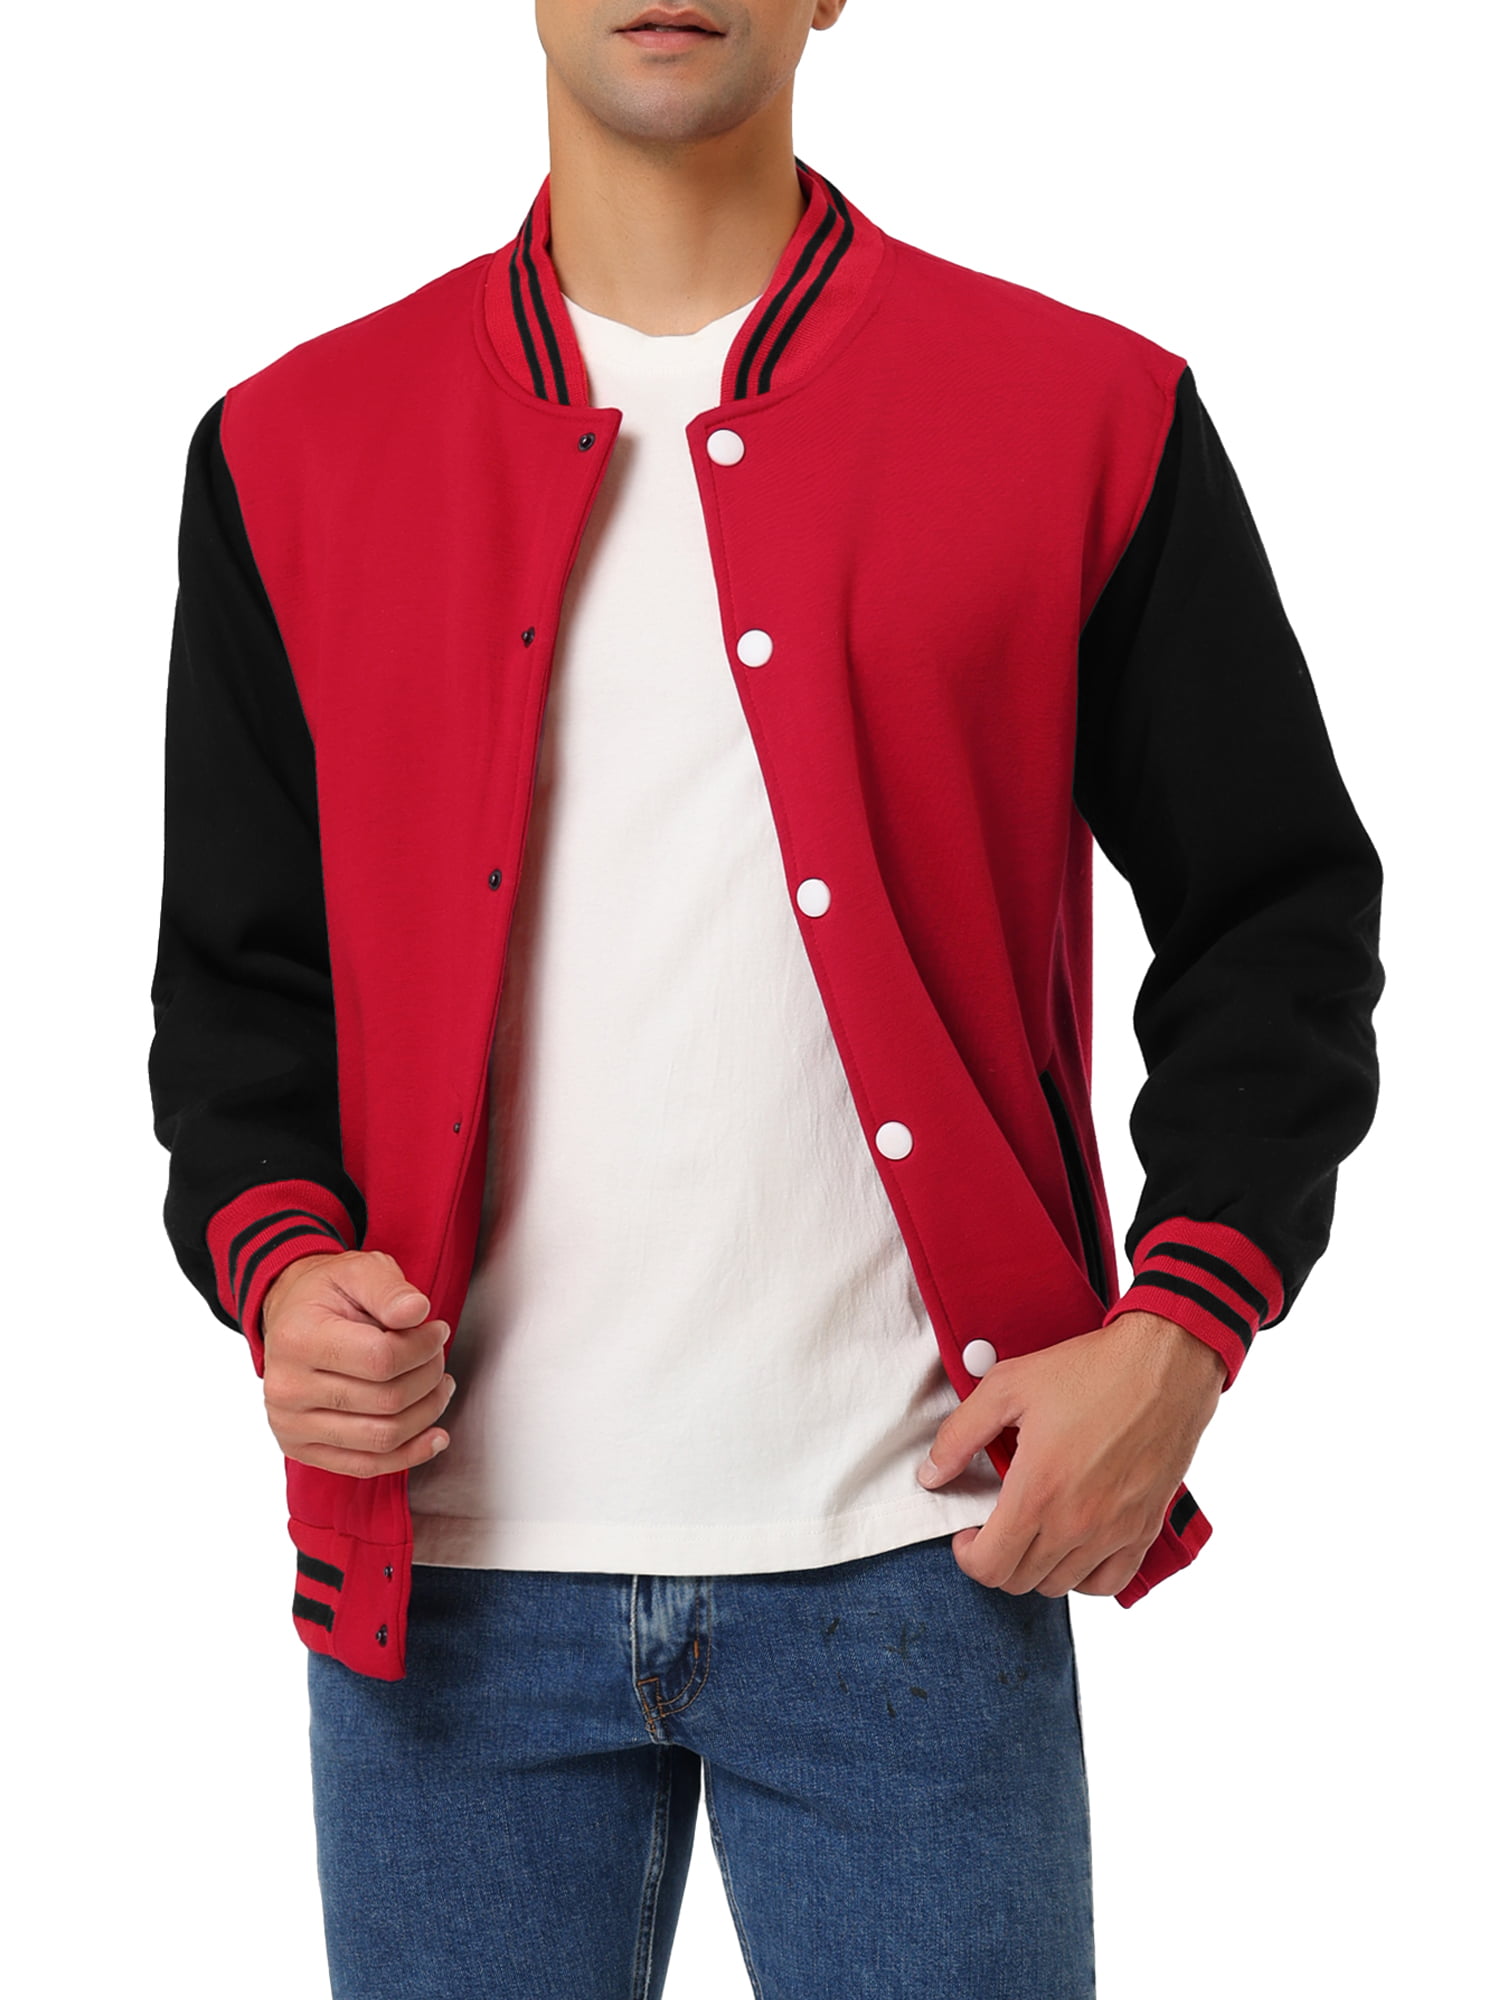 Baseball Varsity Jacket Red and White Cotton Twill